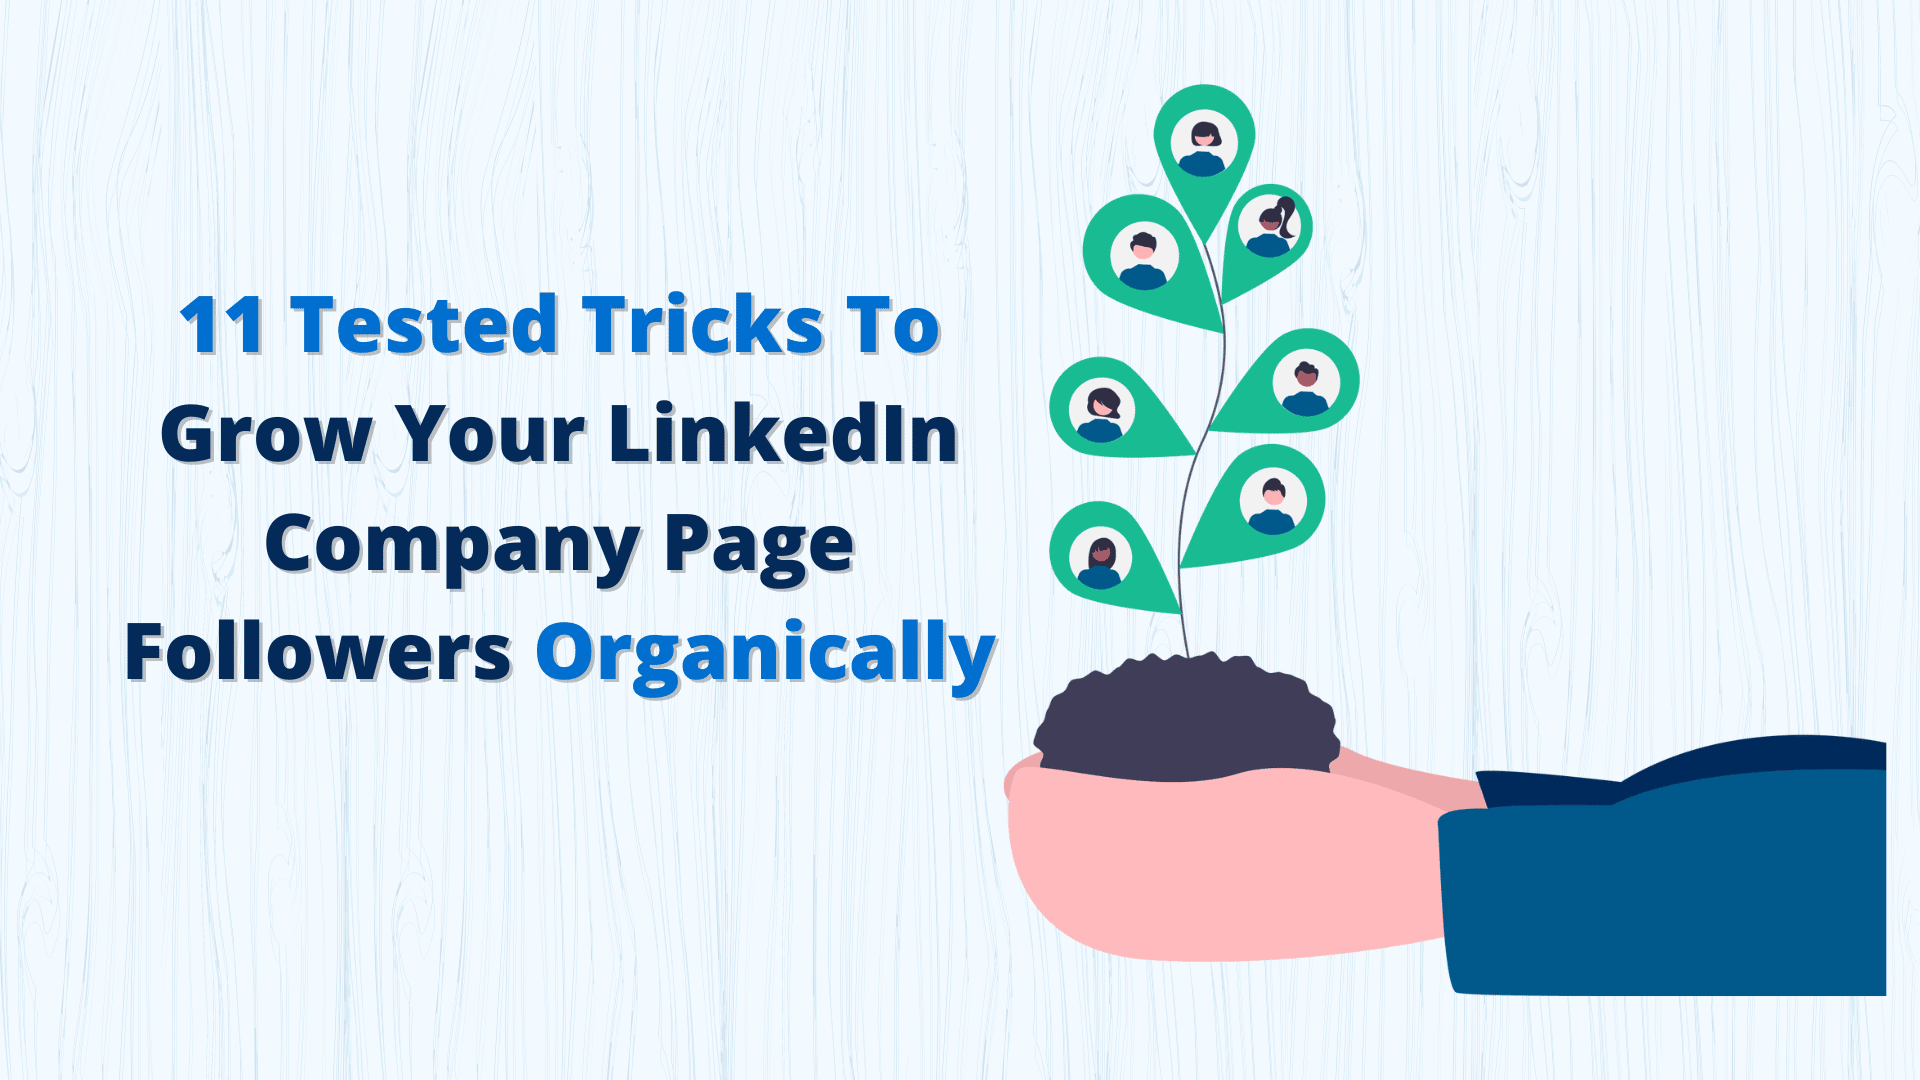 11 Tested Tricks To Grow Your LinkedIn Company Page Followers Organically